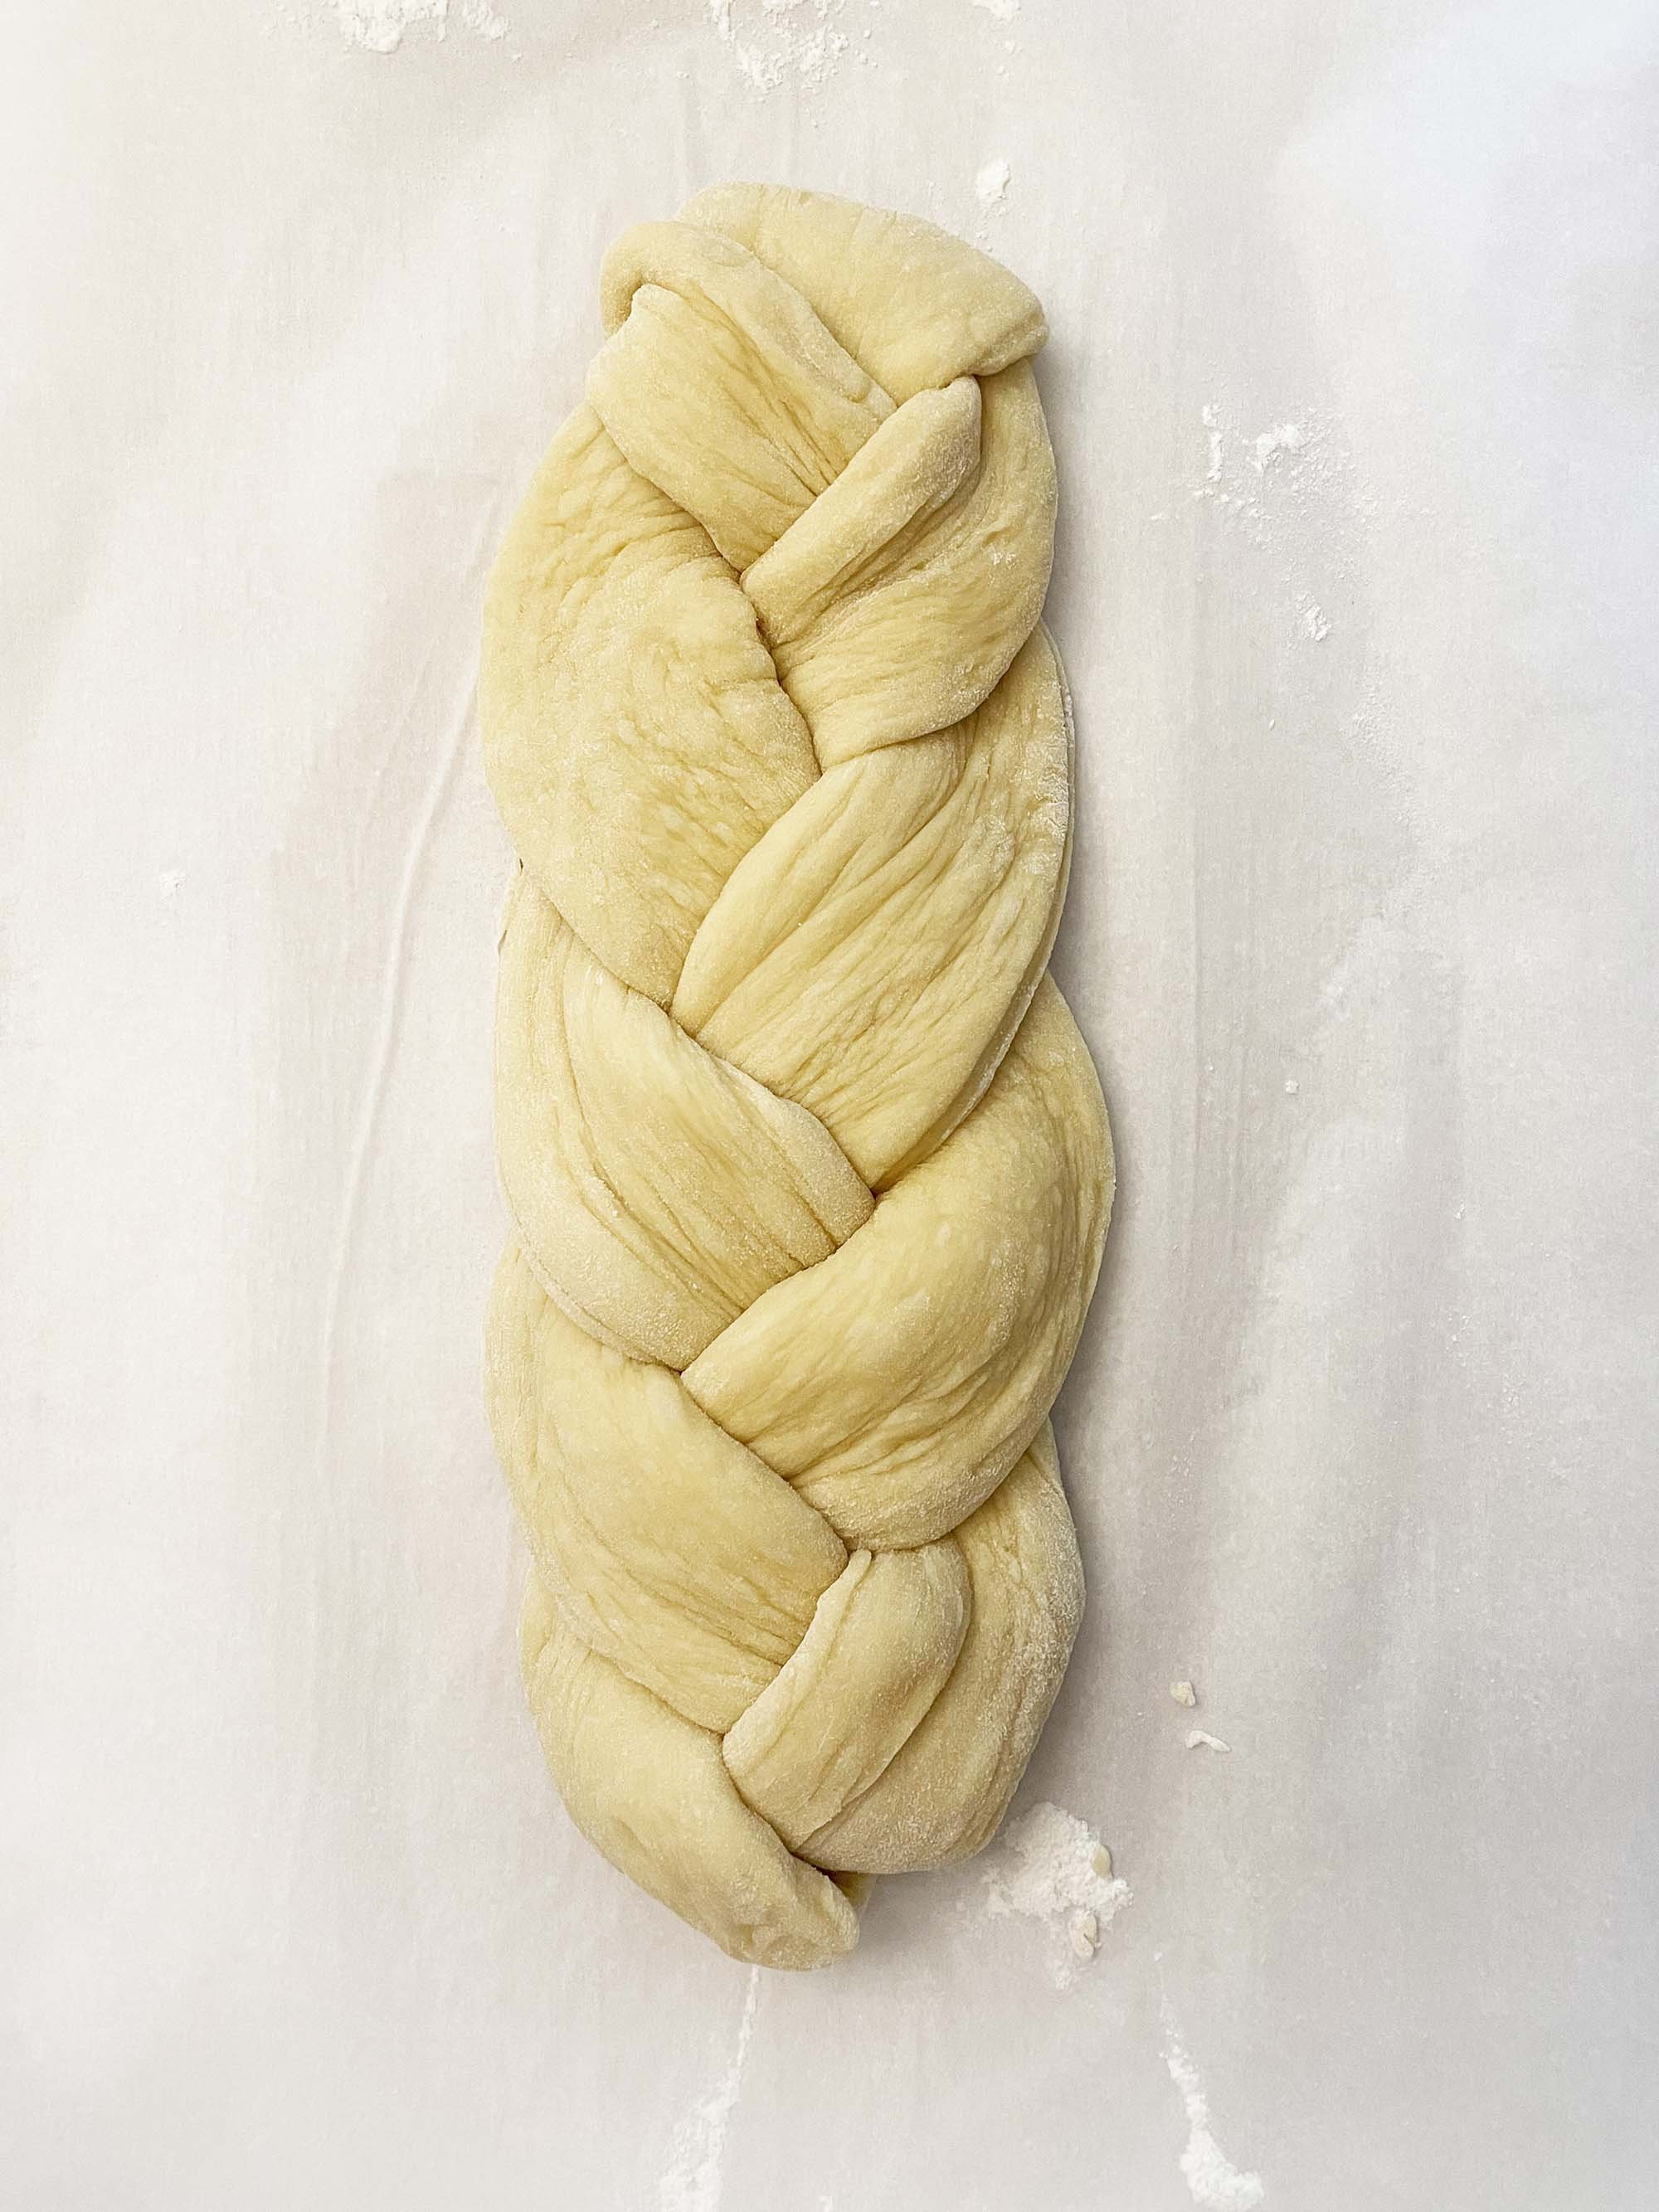 bread-machine-challah7.jpg